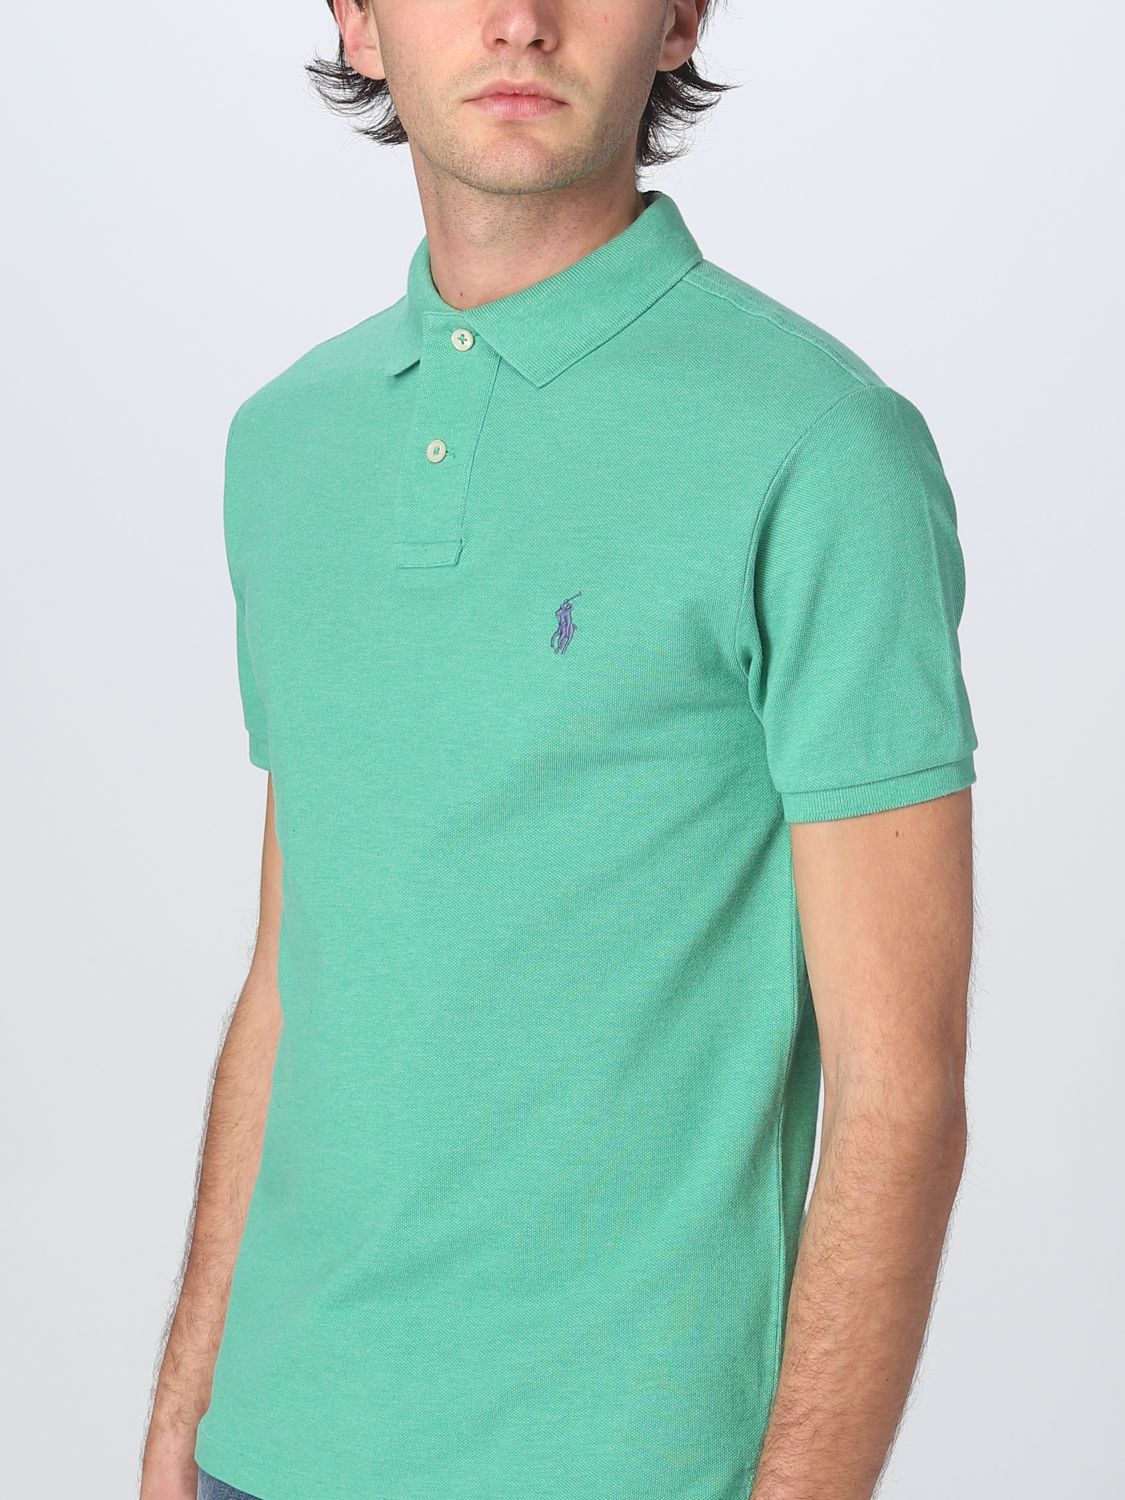 POLO RALPH LAUREN: polo shirt for man - Forest Green | Polo Ralph Lauren  polo shirt 710536856 online on 